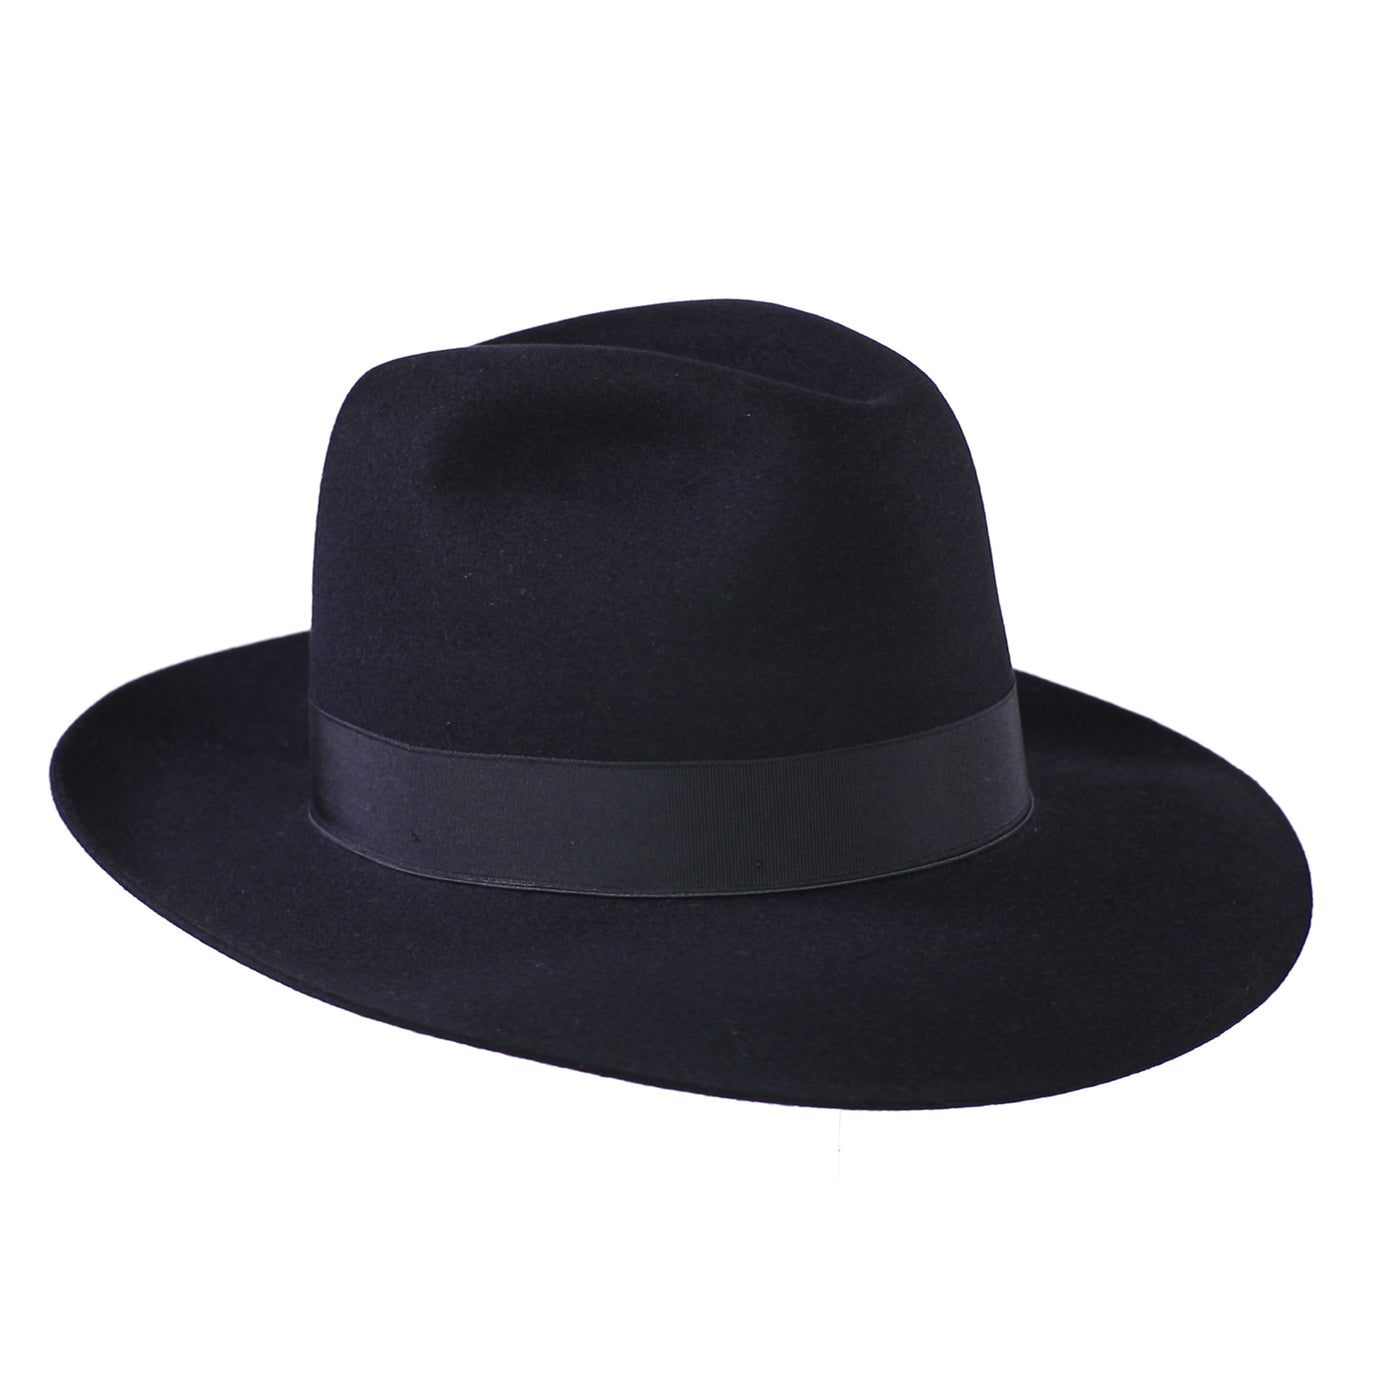 Angelo 300, product_type] - Borsalino for Atica fedora hat